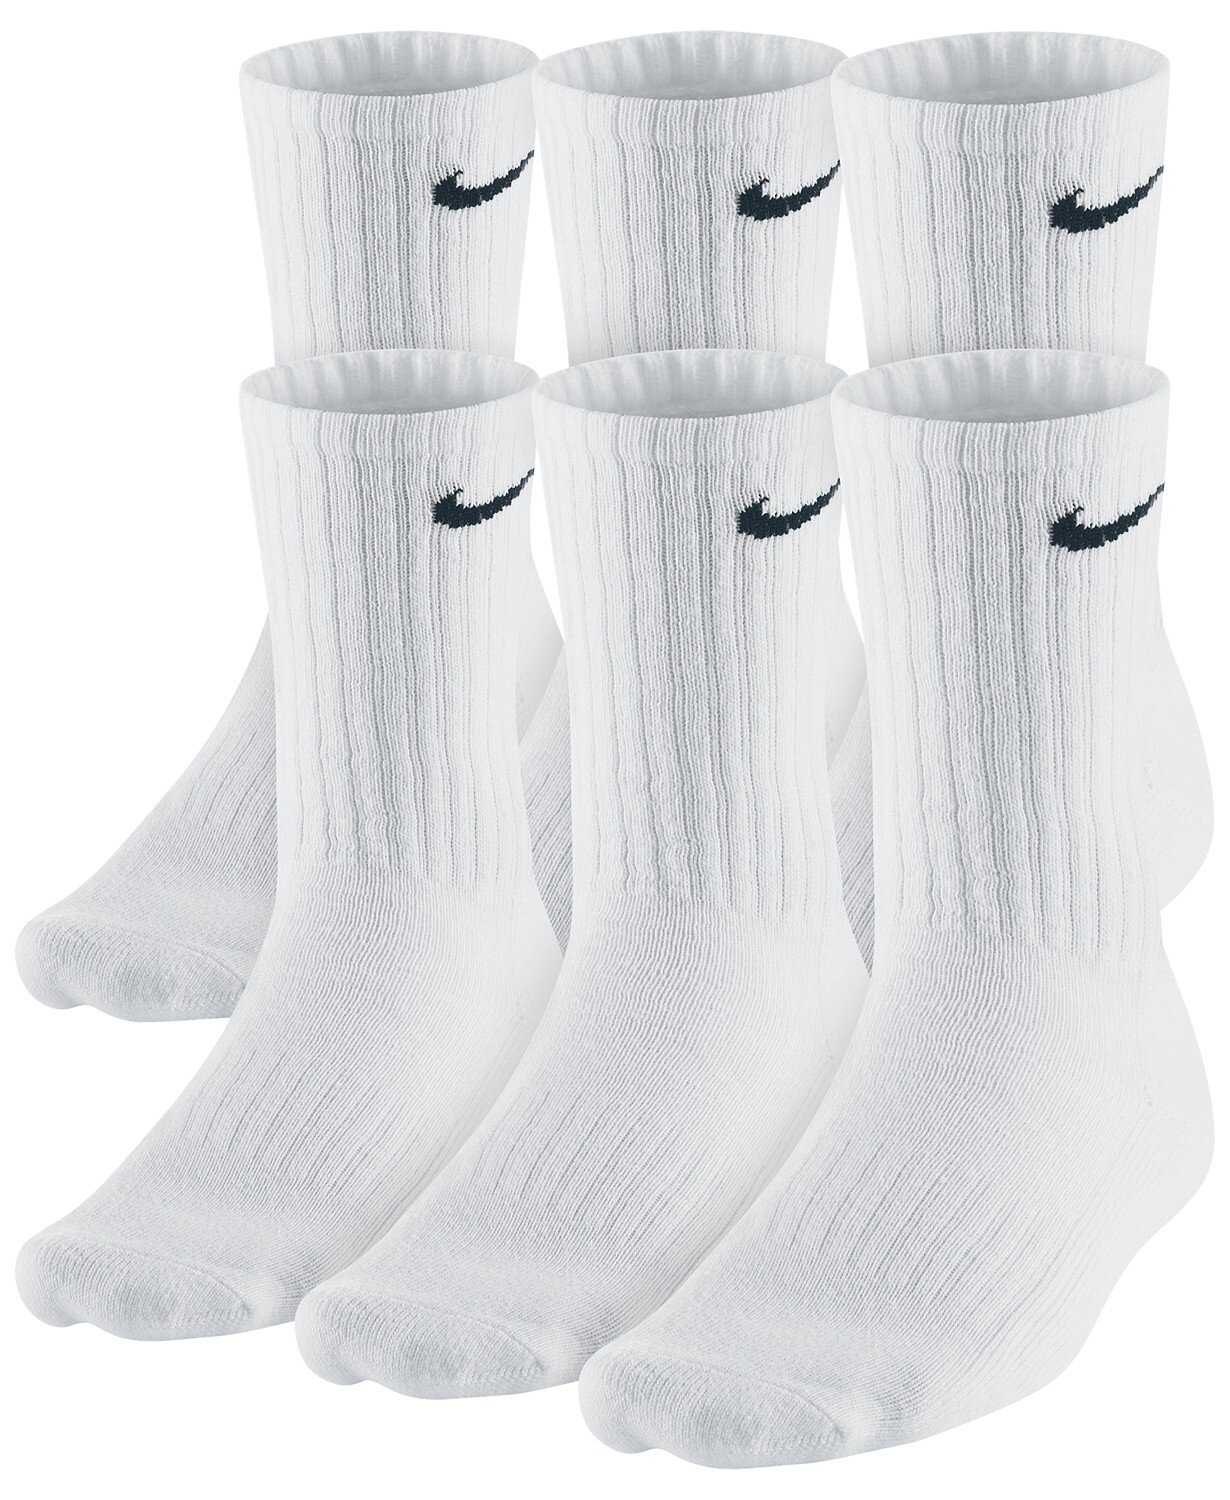 nike socks for sale near me